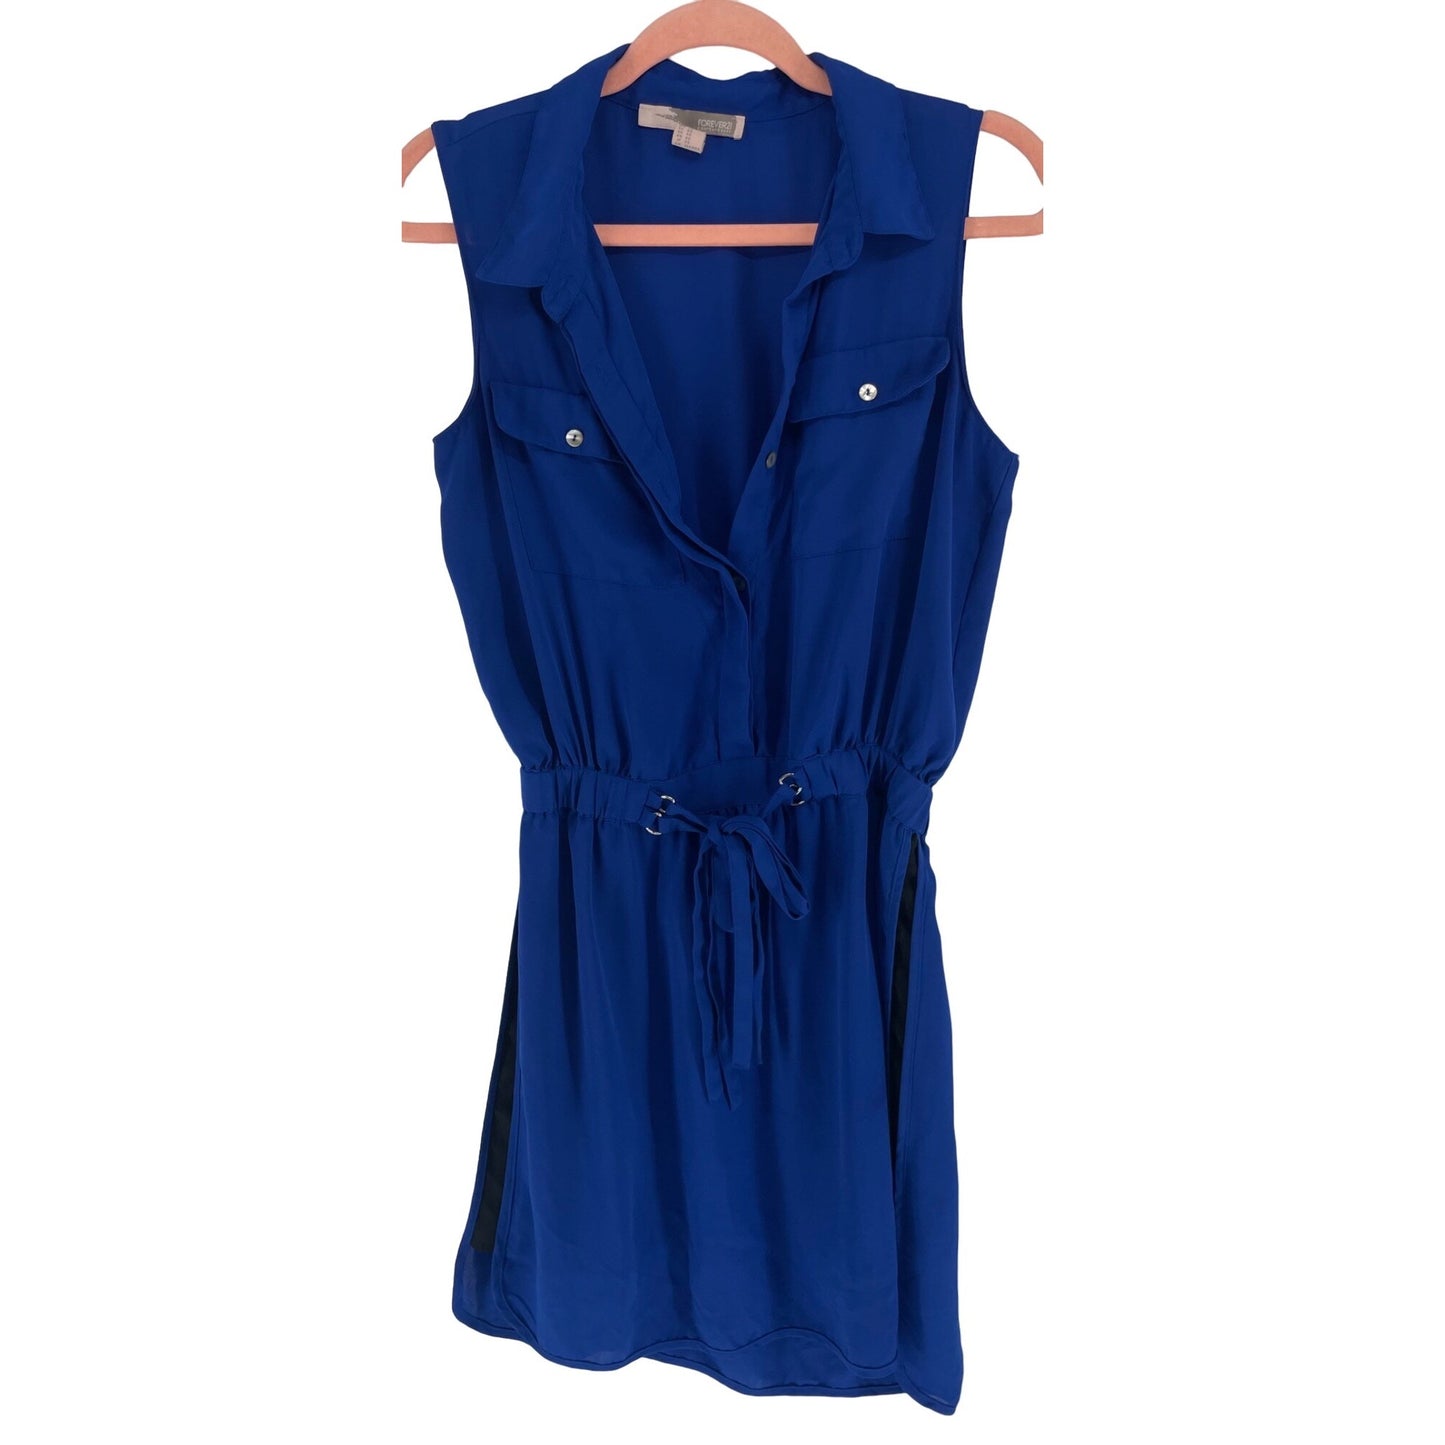 Forever 21 Women's Size XS Cobalt Blue Collared Sleeveless Elastic Waist Dress